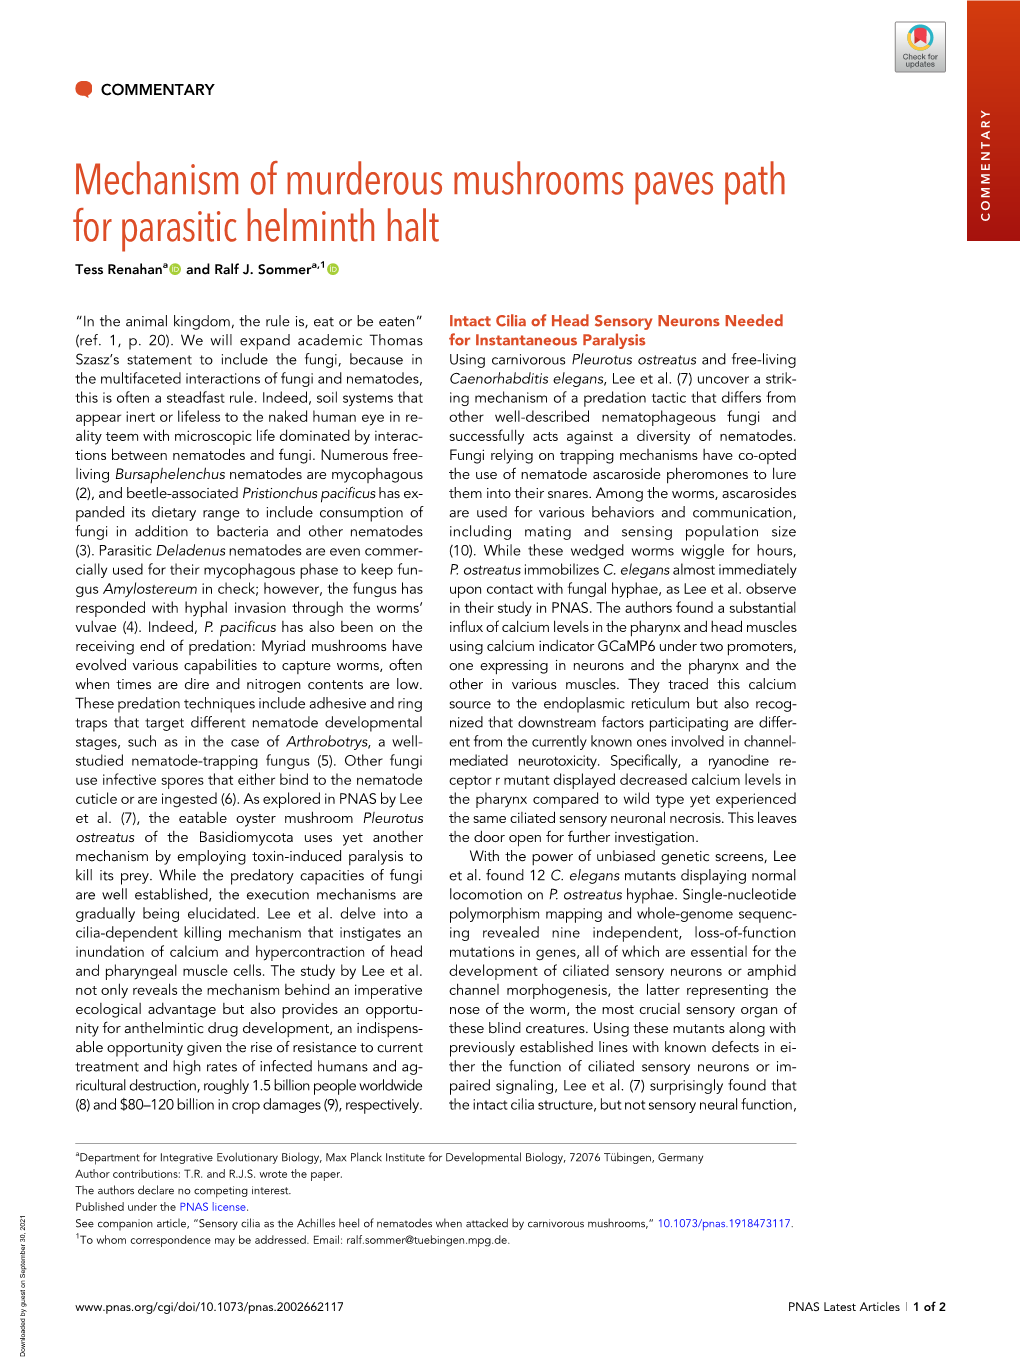 Mechanism of Murderous Mushrooms Paves Path for Parasitic Helminth Halt